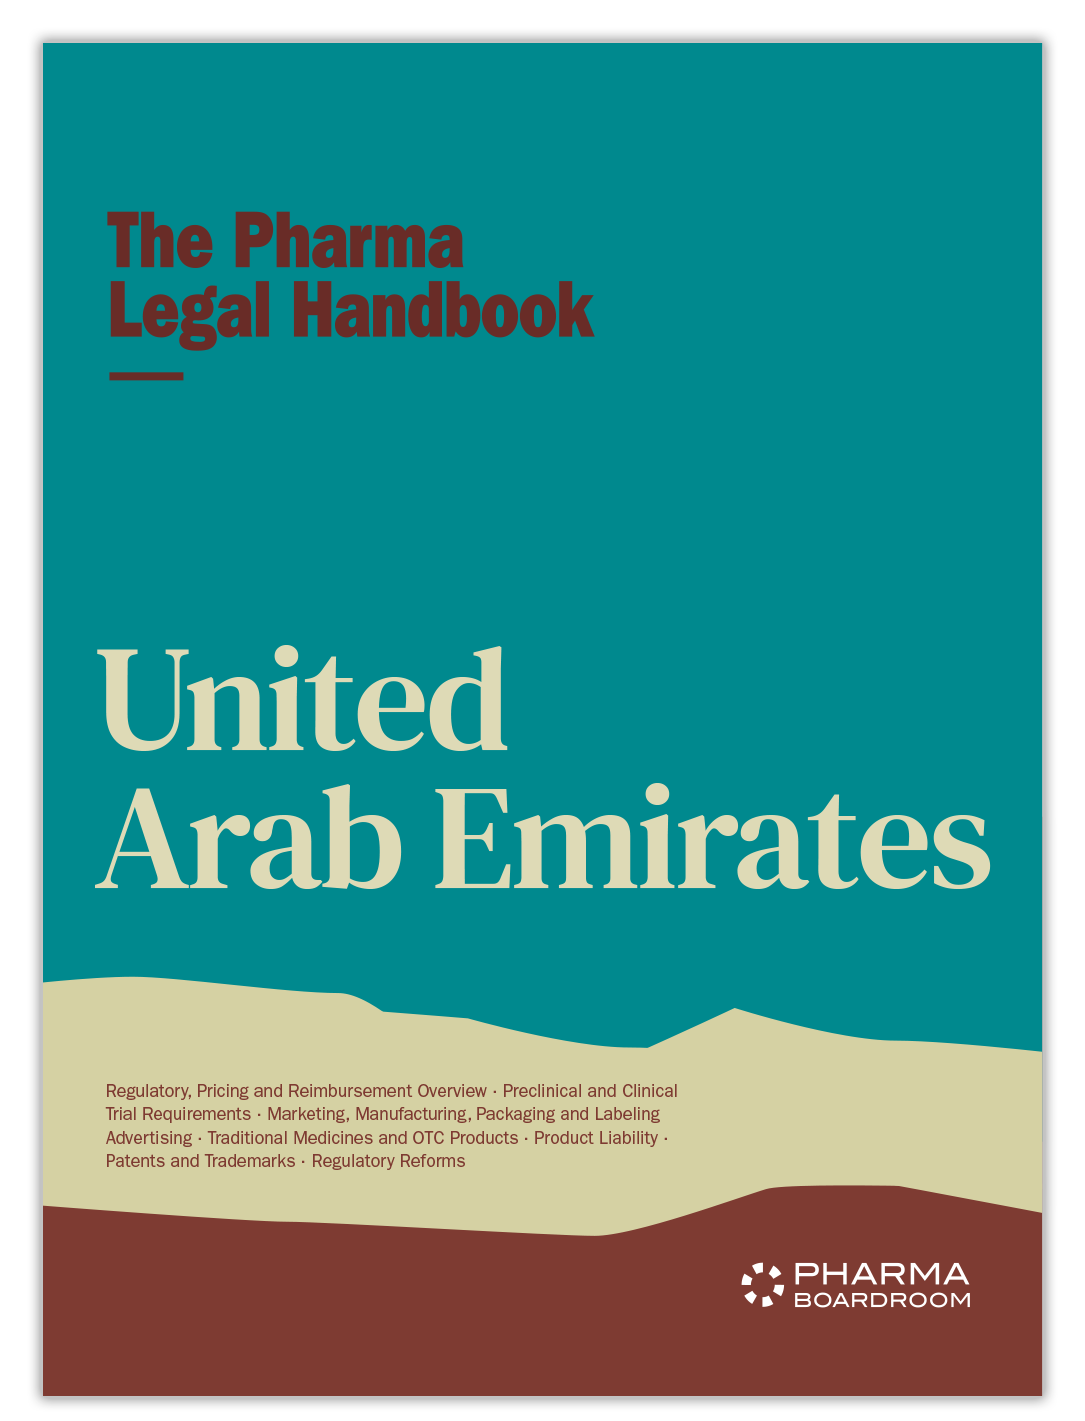 The Pharma Legal Handbook: United Arab Emirates